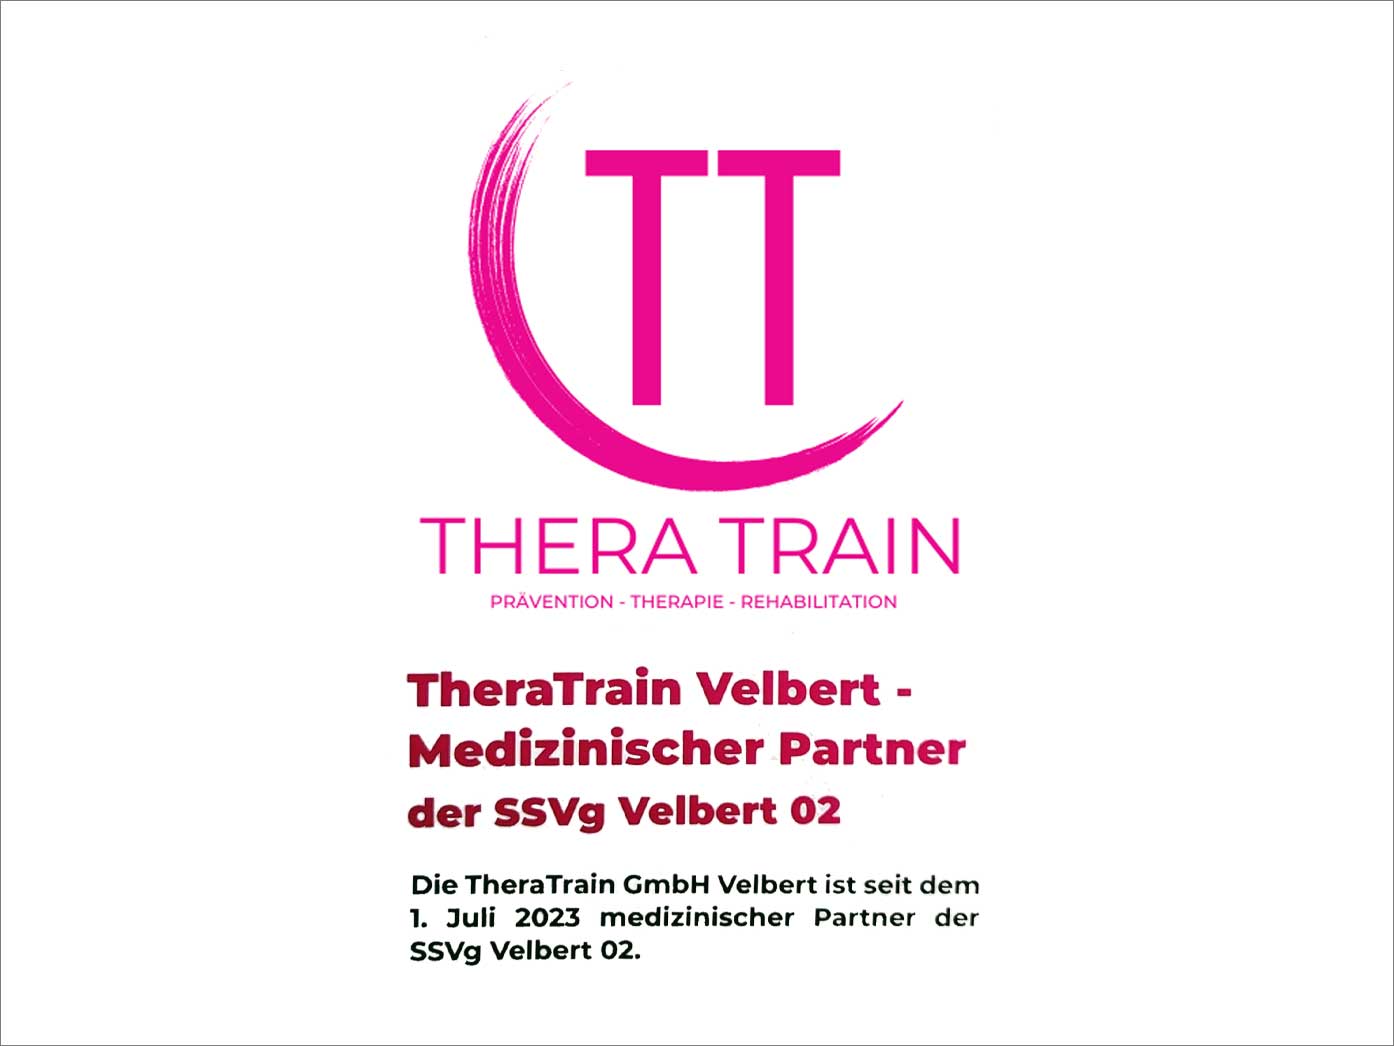 TheraTrain Velbert ist offizieller medizinischer Partner der SSVg Velbert